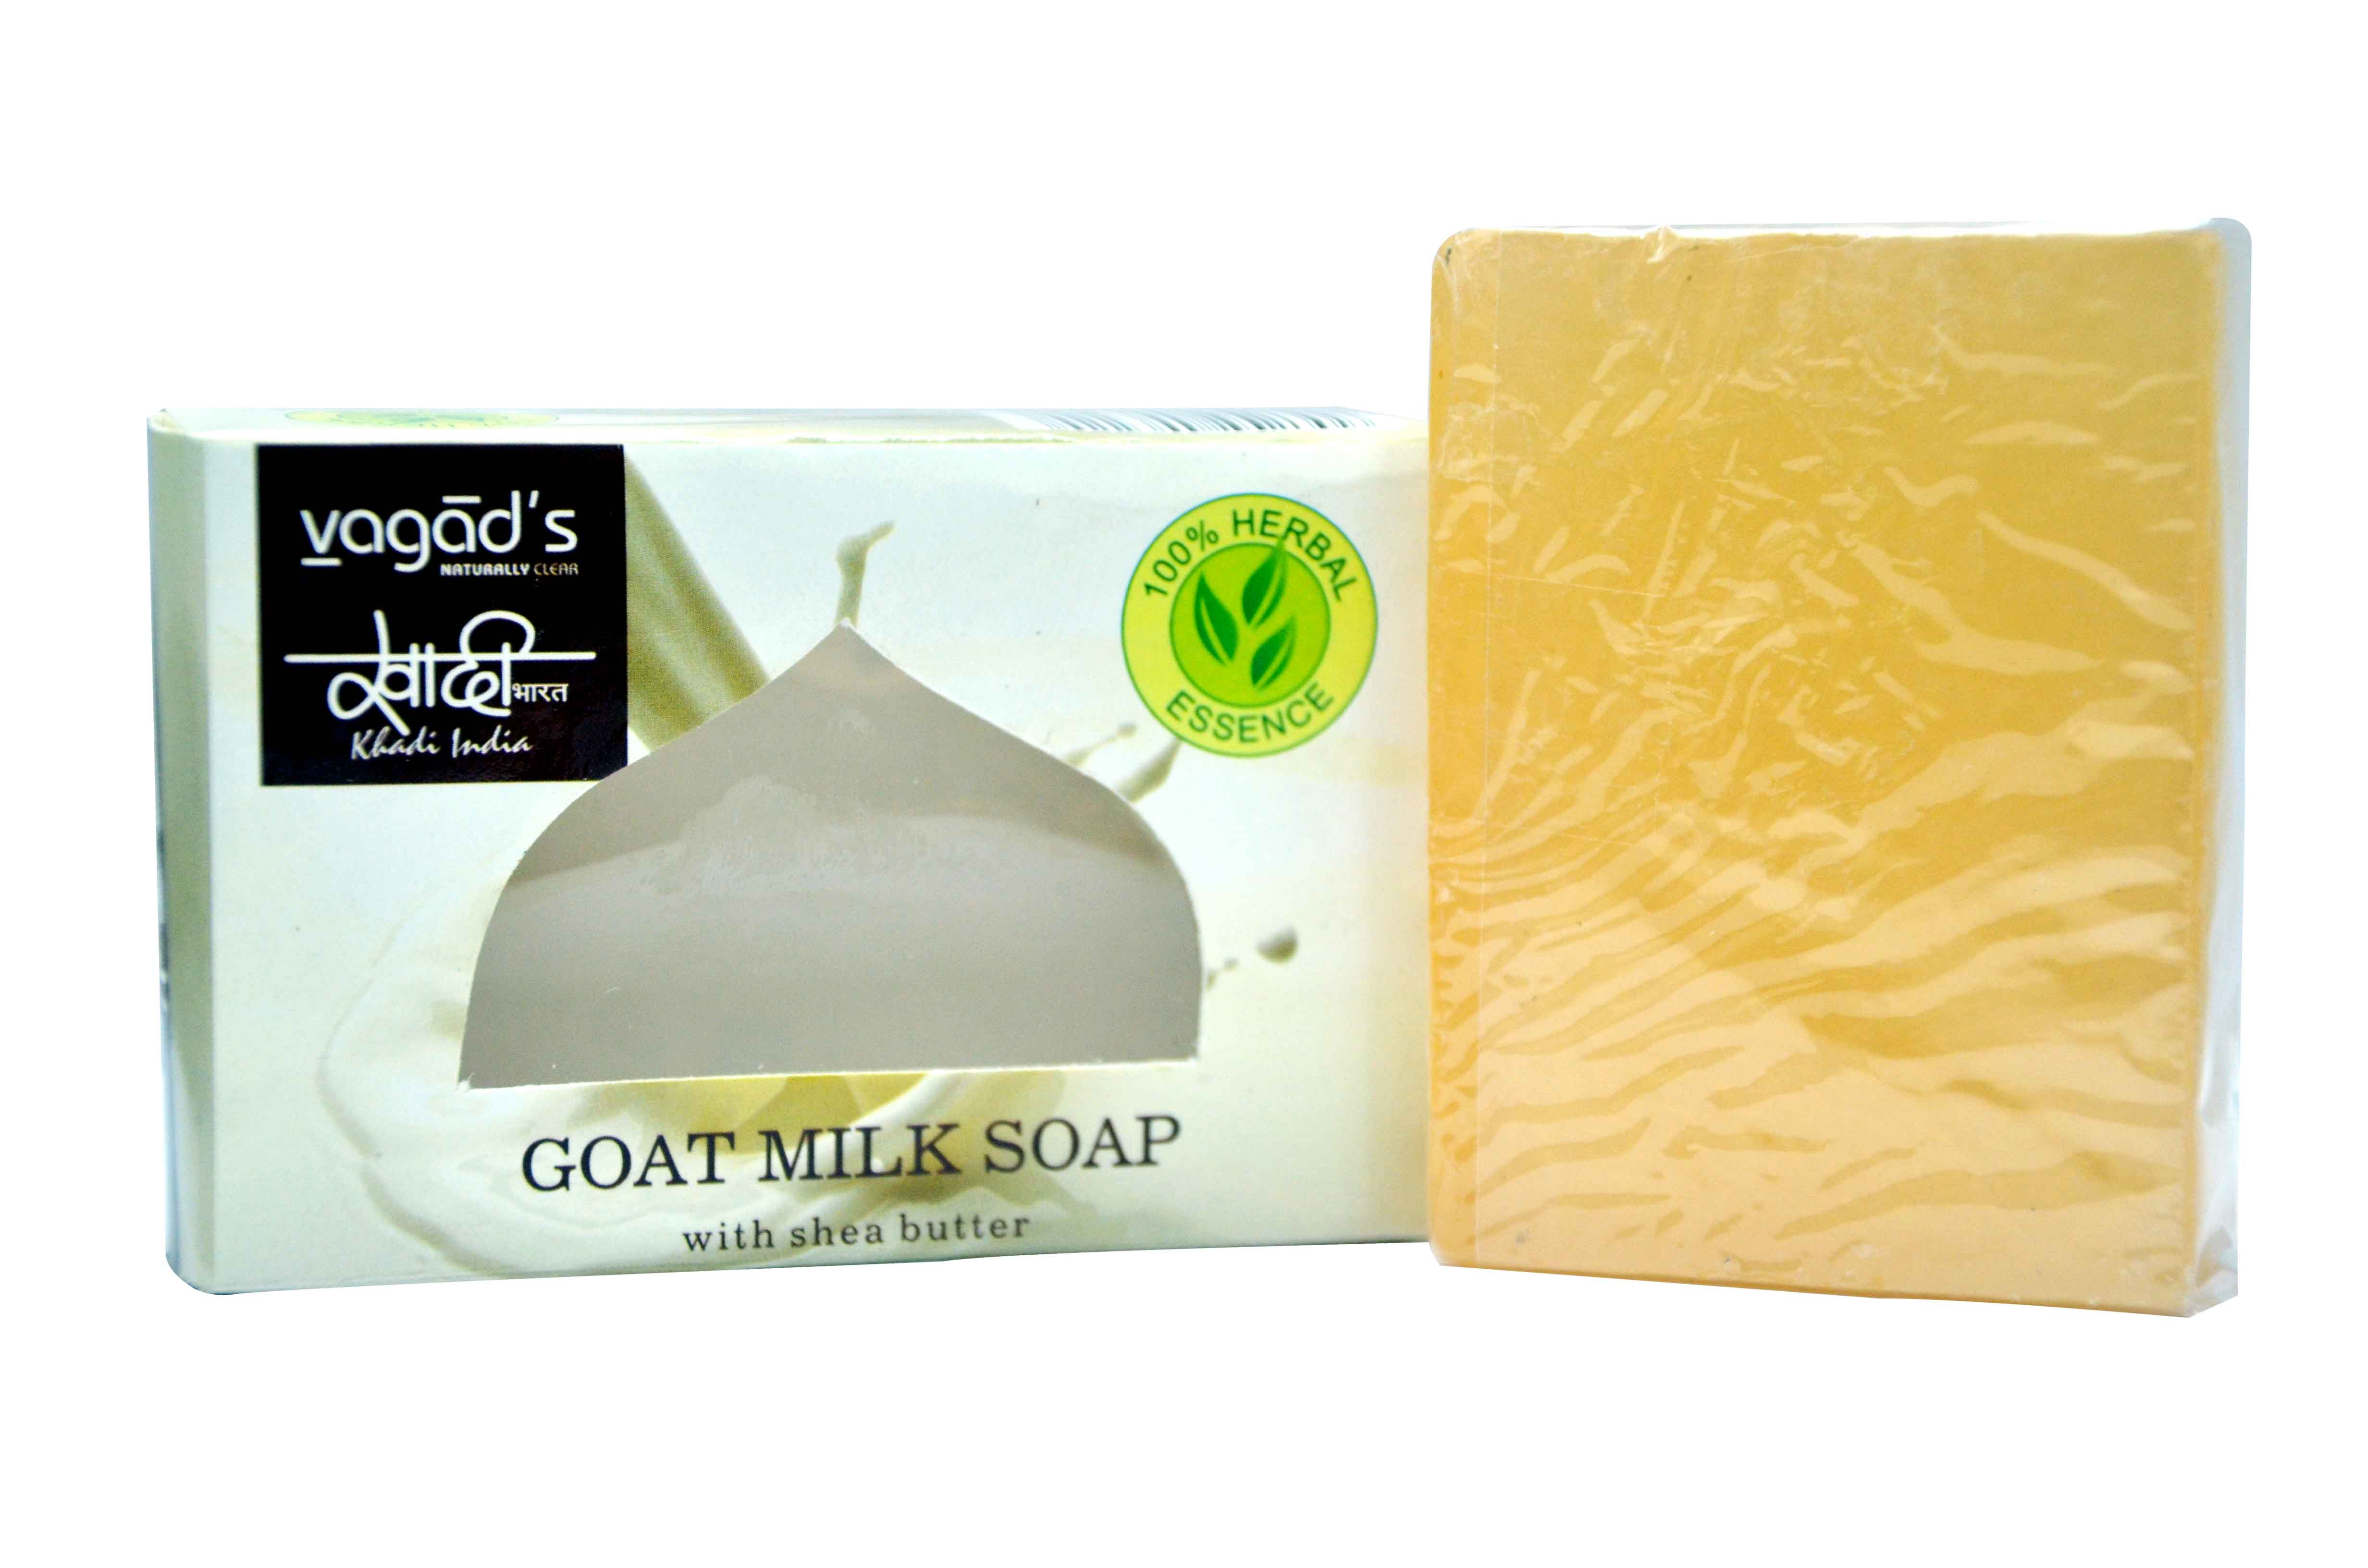 Vagad's Khadi Goat Milk Soap With Shea Butter